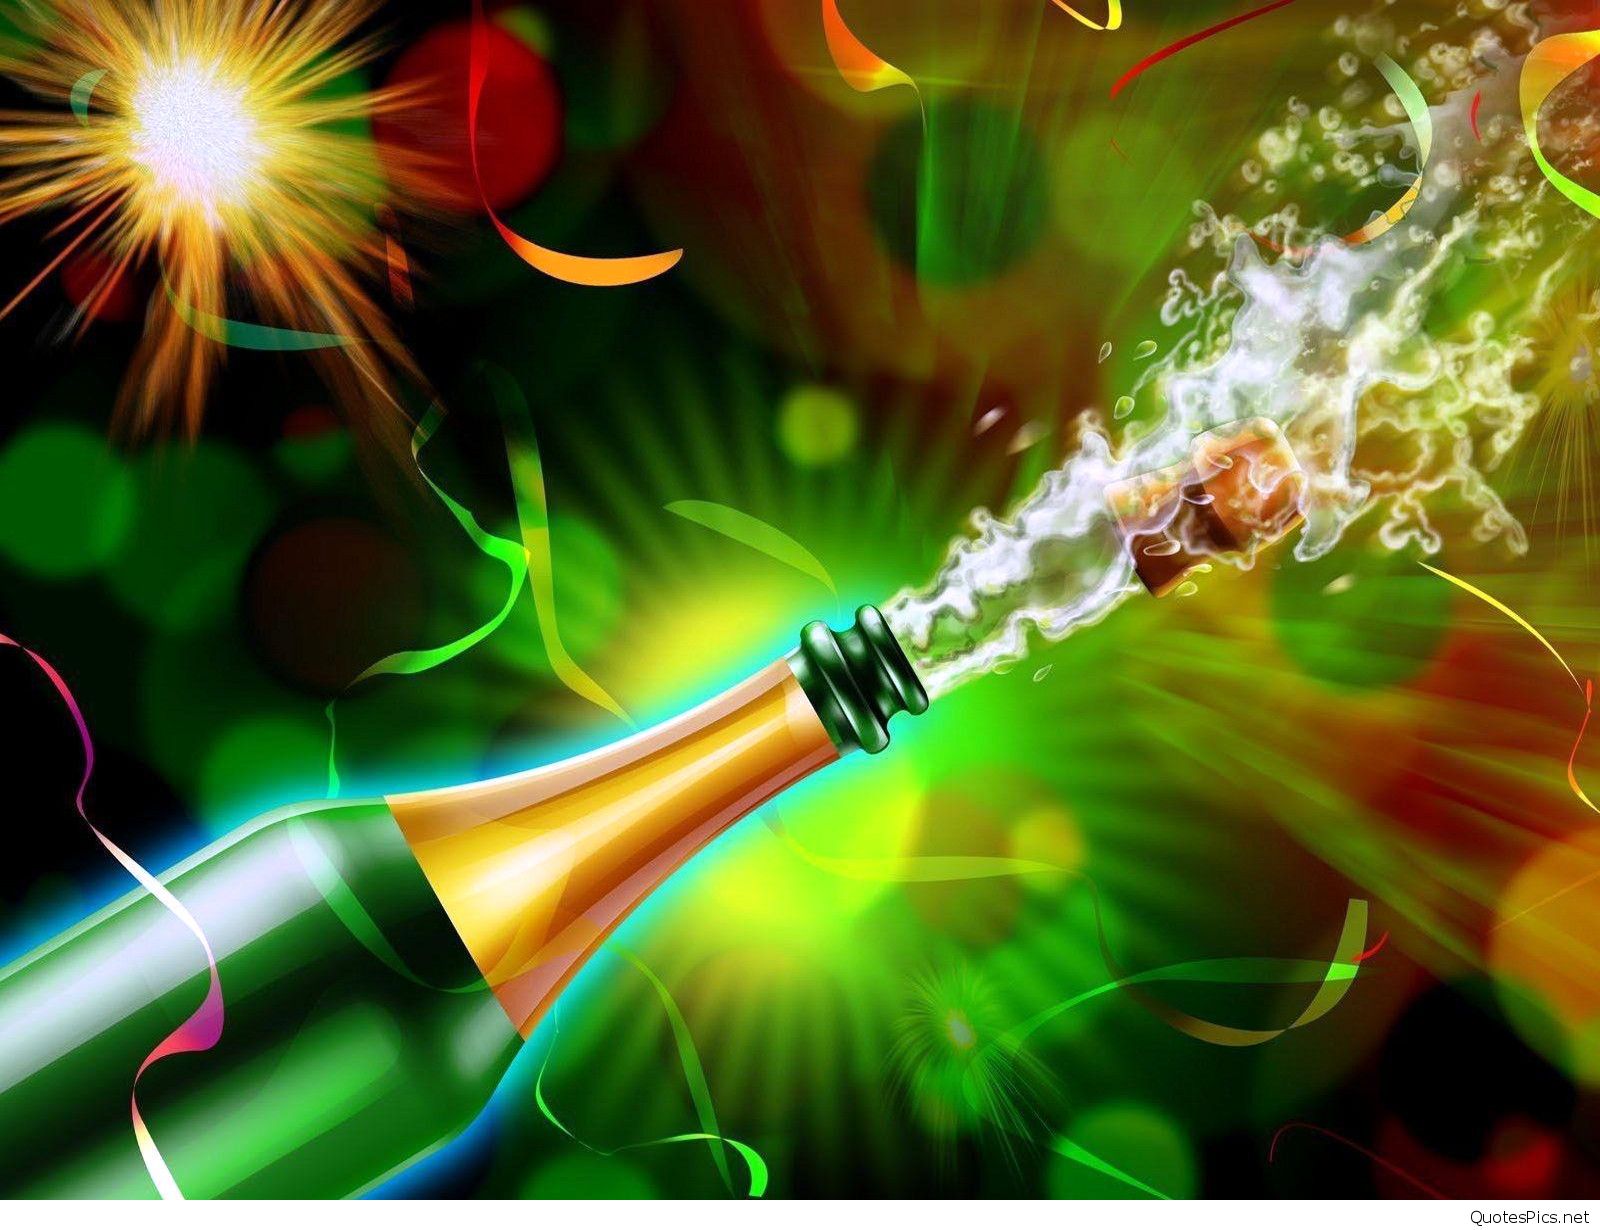 Happy New Year HD Wallpaper Champagne